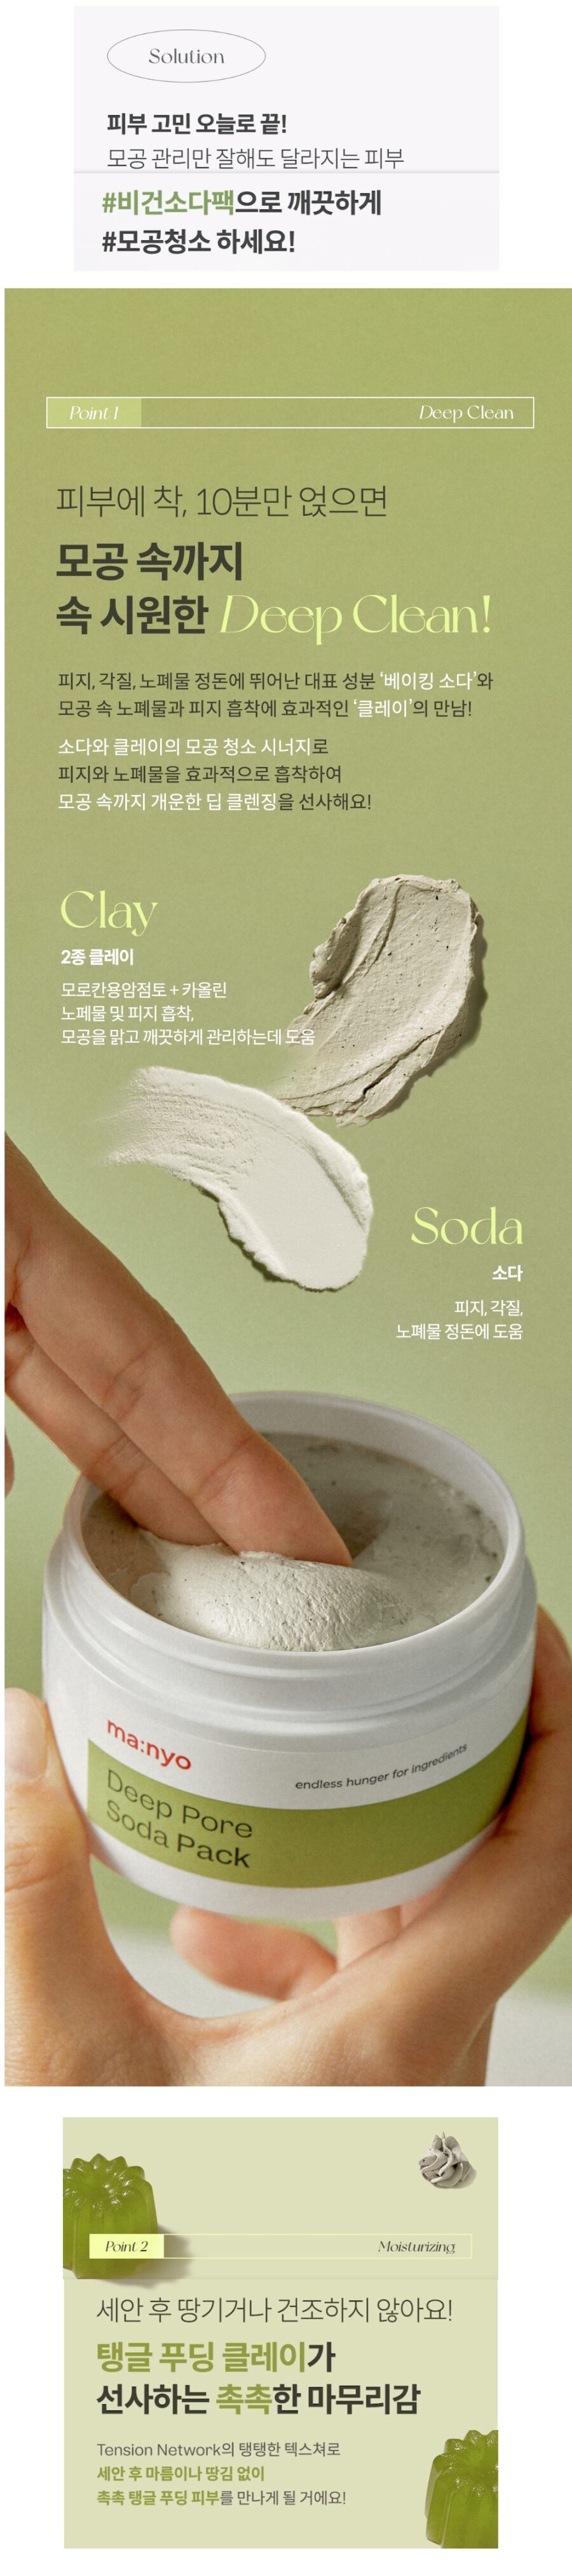 Manyo Factory Deep Pore Soda Pack korean skincare product online shop malaysia macau poland2